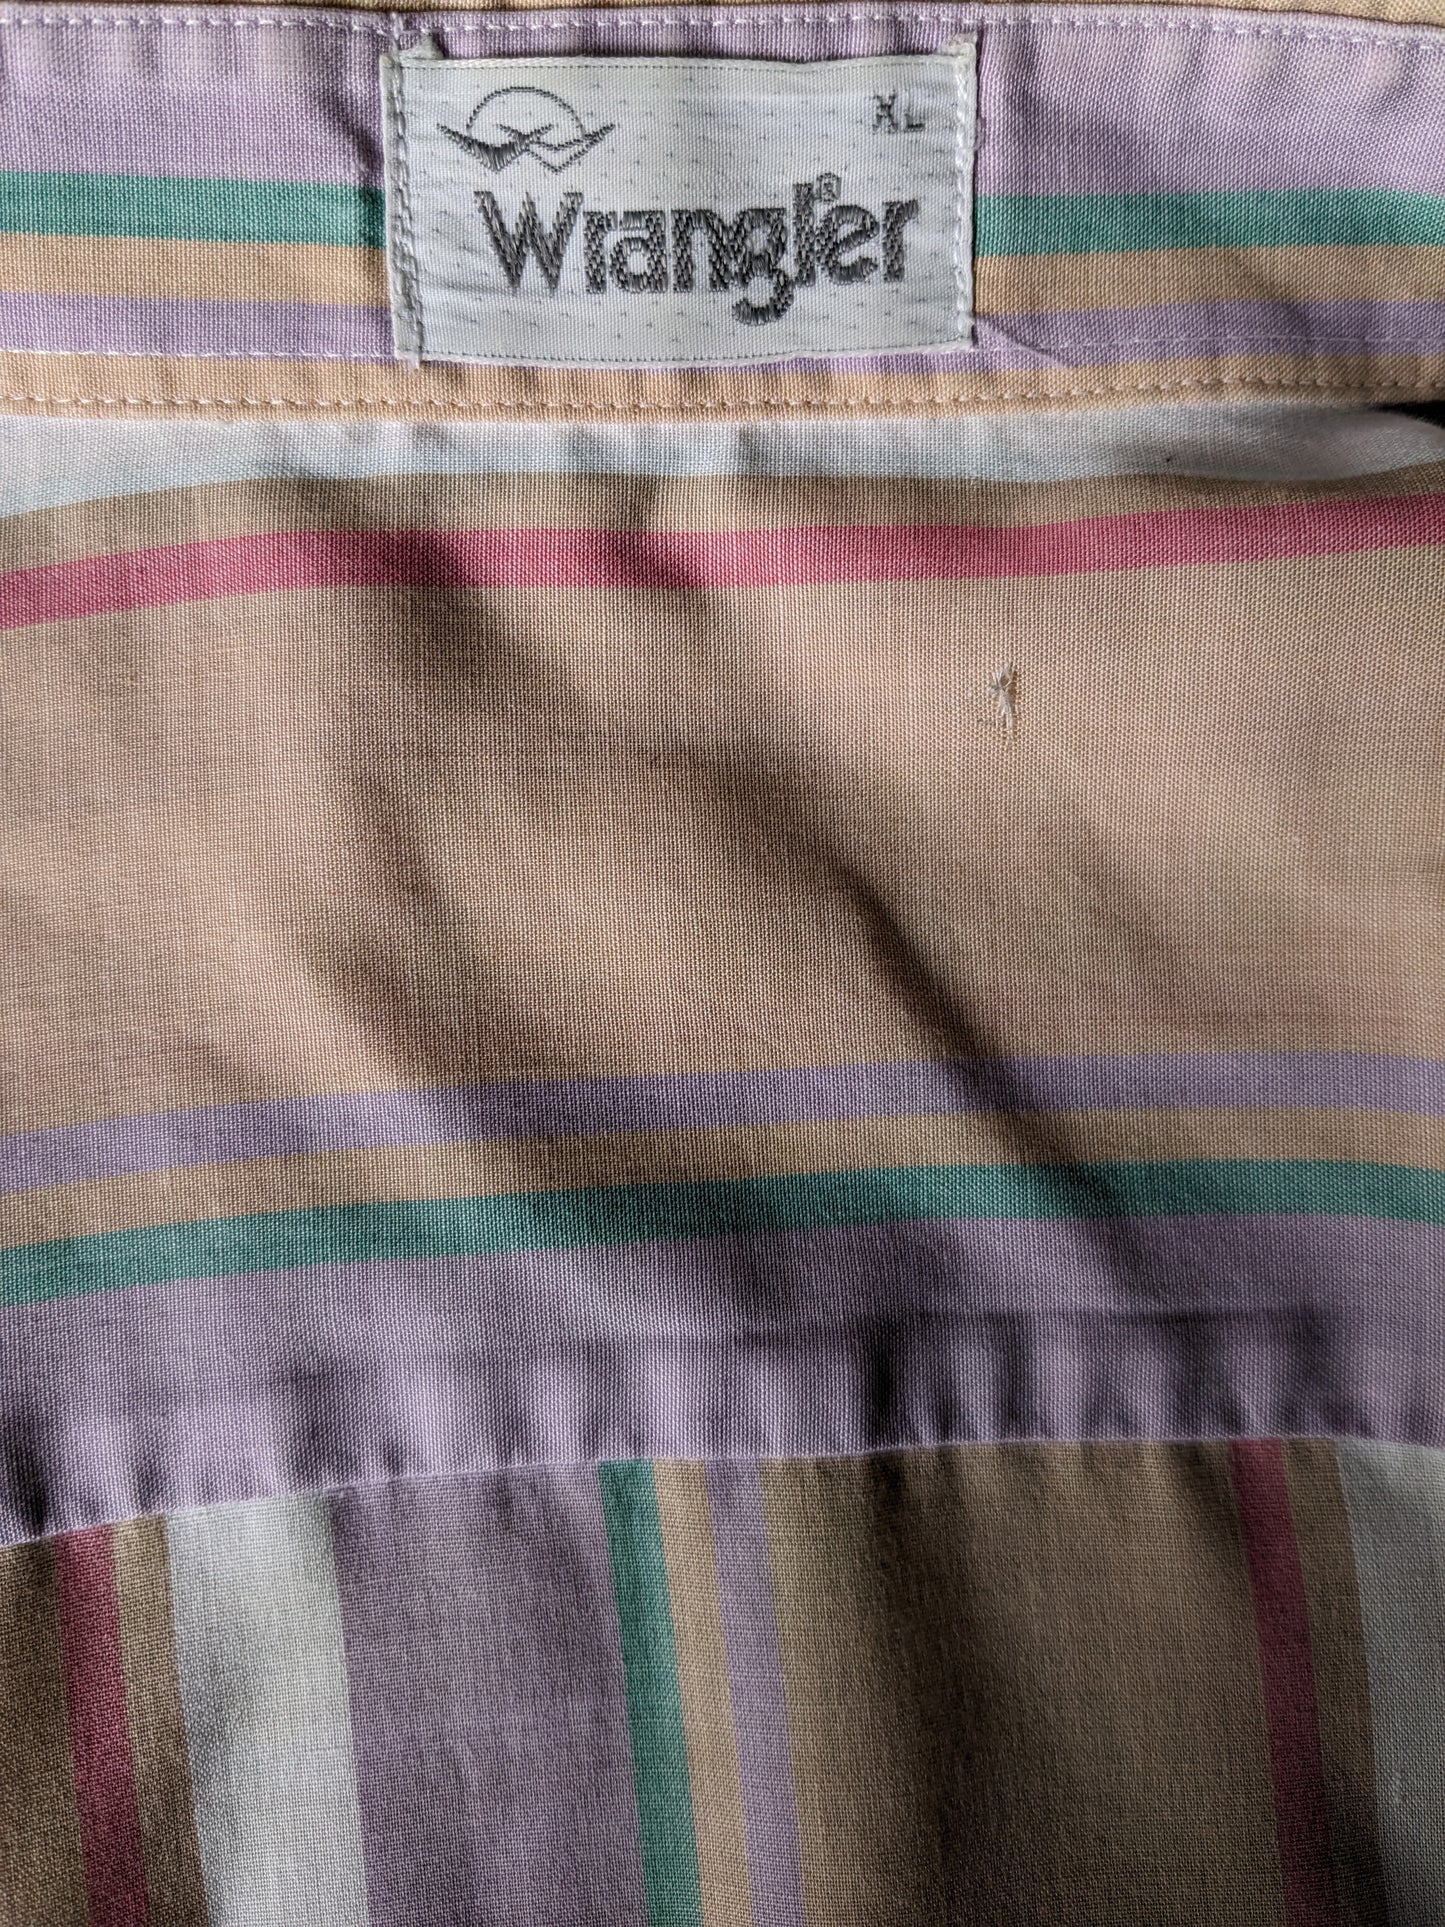 Camicia vintage wrangler. Strisce arancione verde viola rosa. Taglia XL.